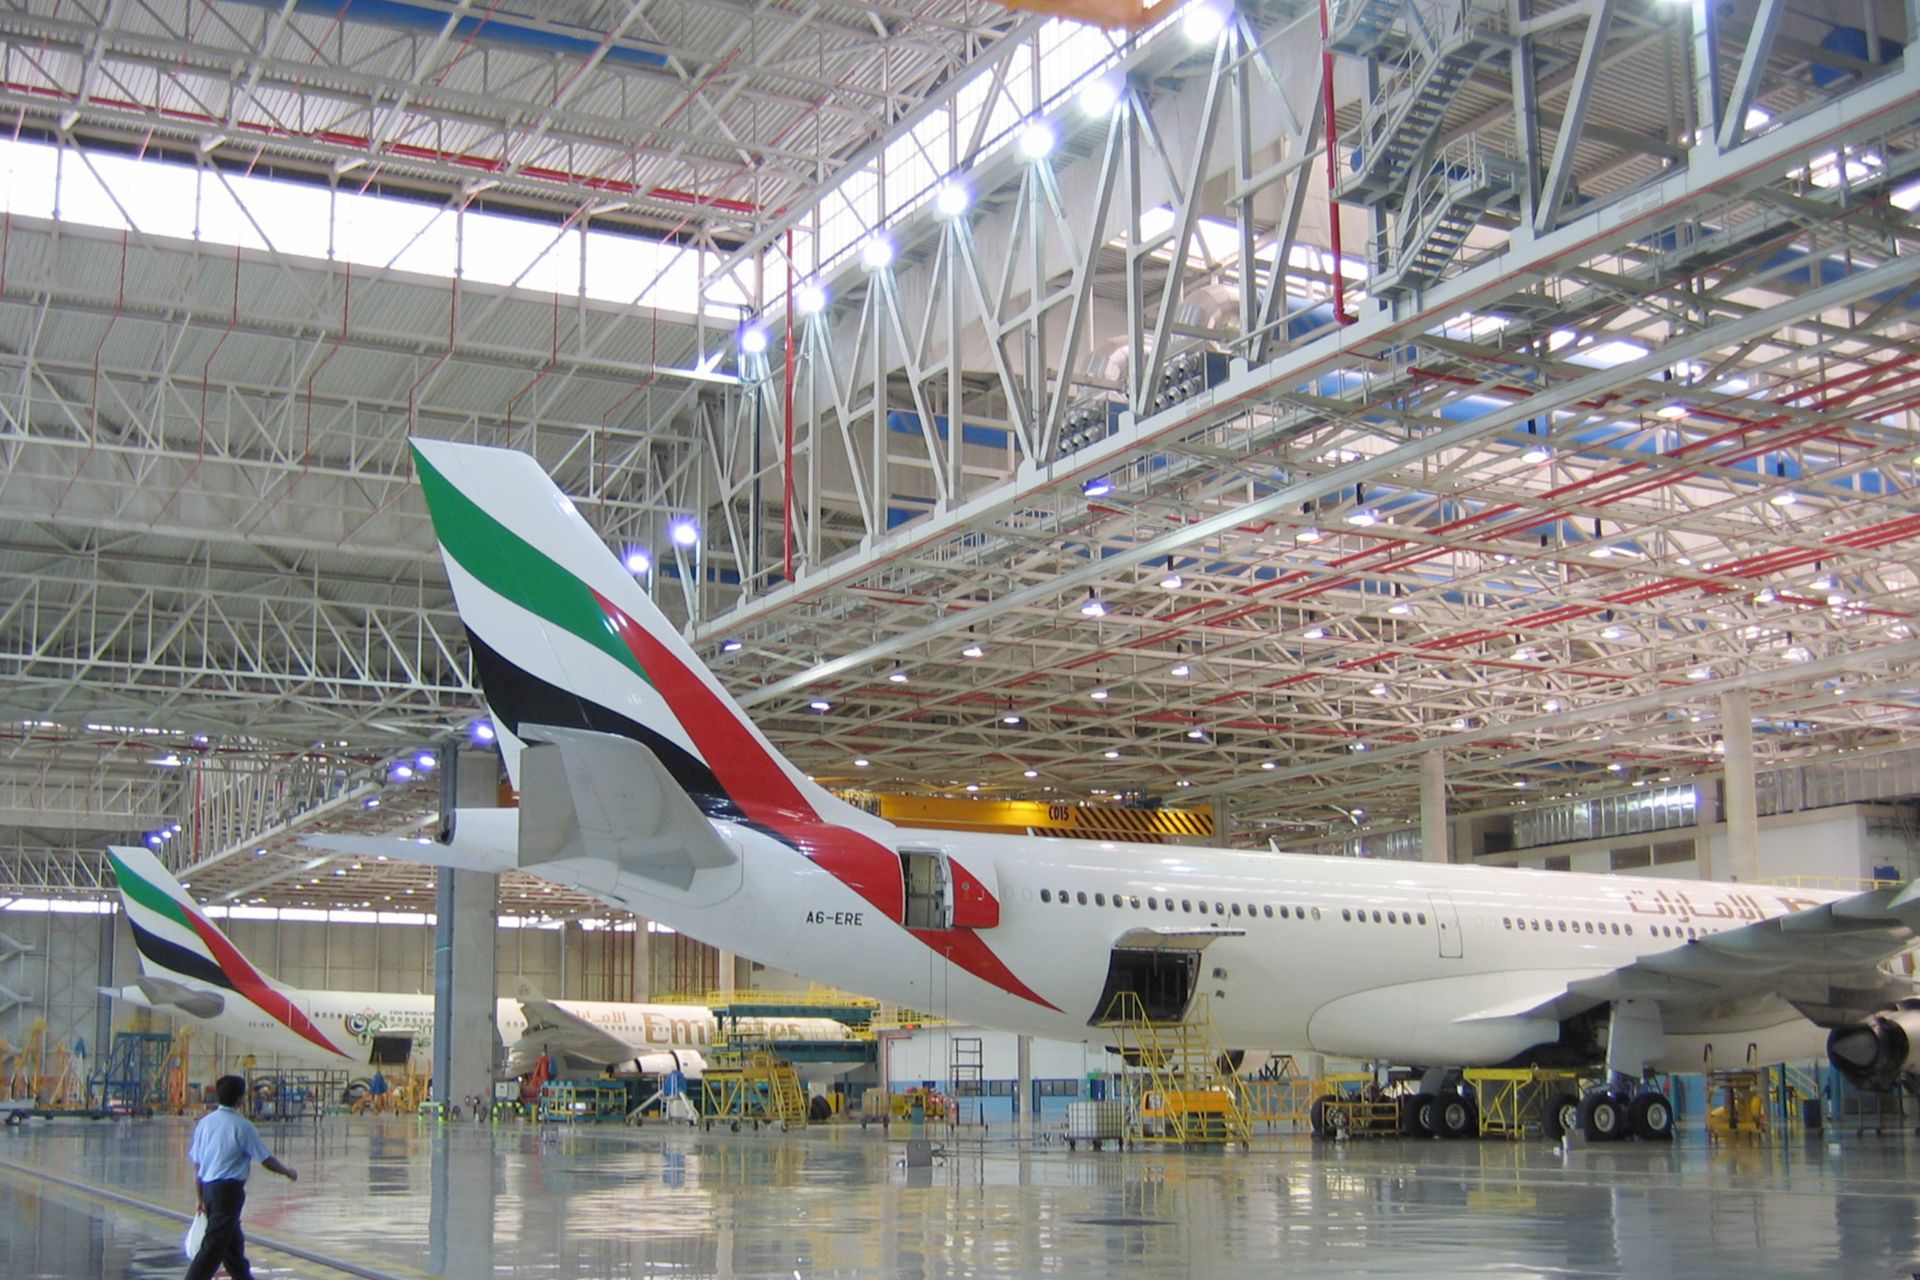 Dubai International Airport Emirates hangar with planes and man walking